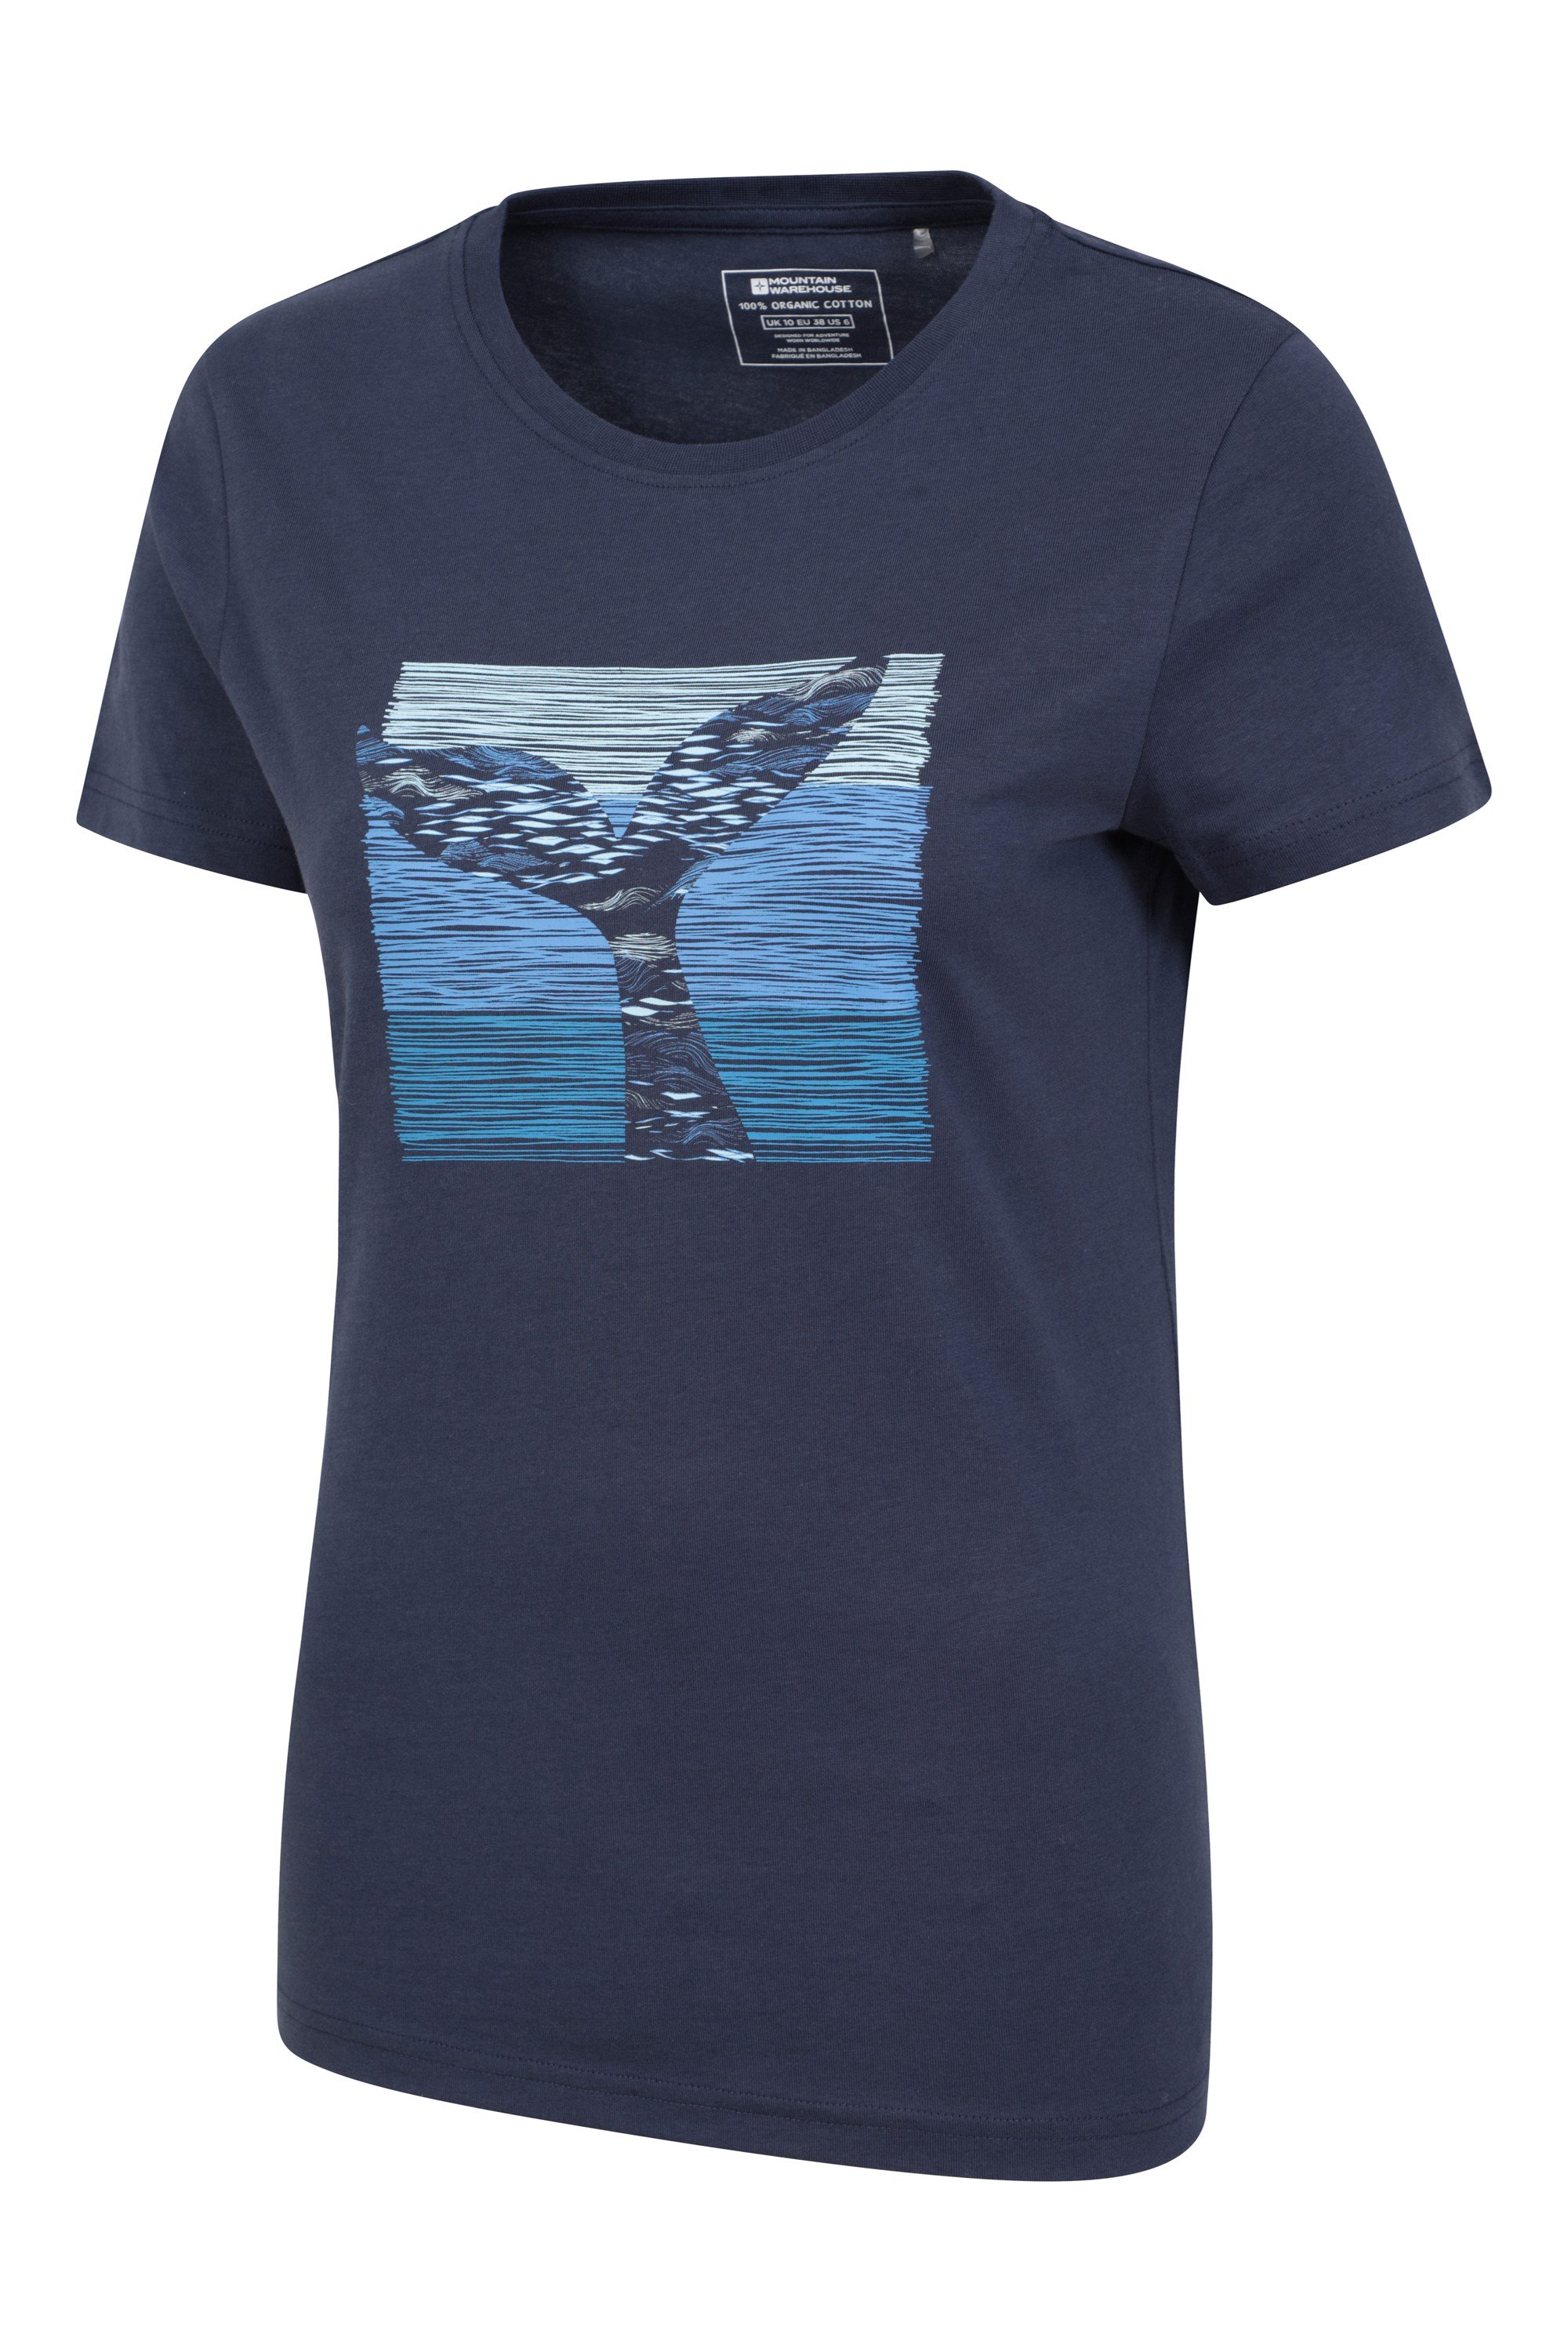 Whale Tail Womens Organic T-Shirt